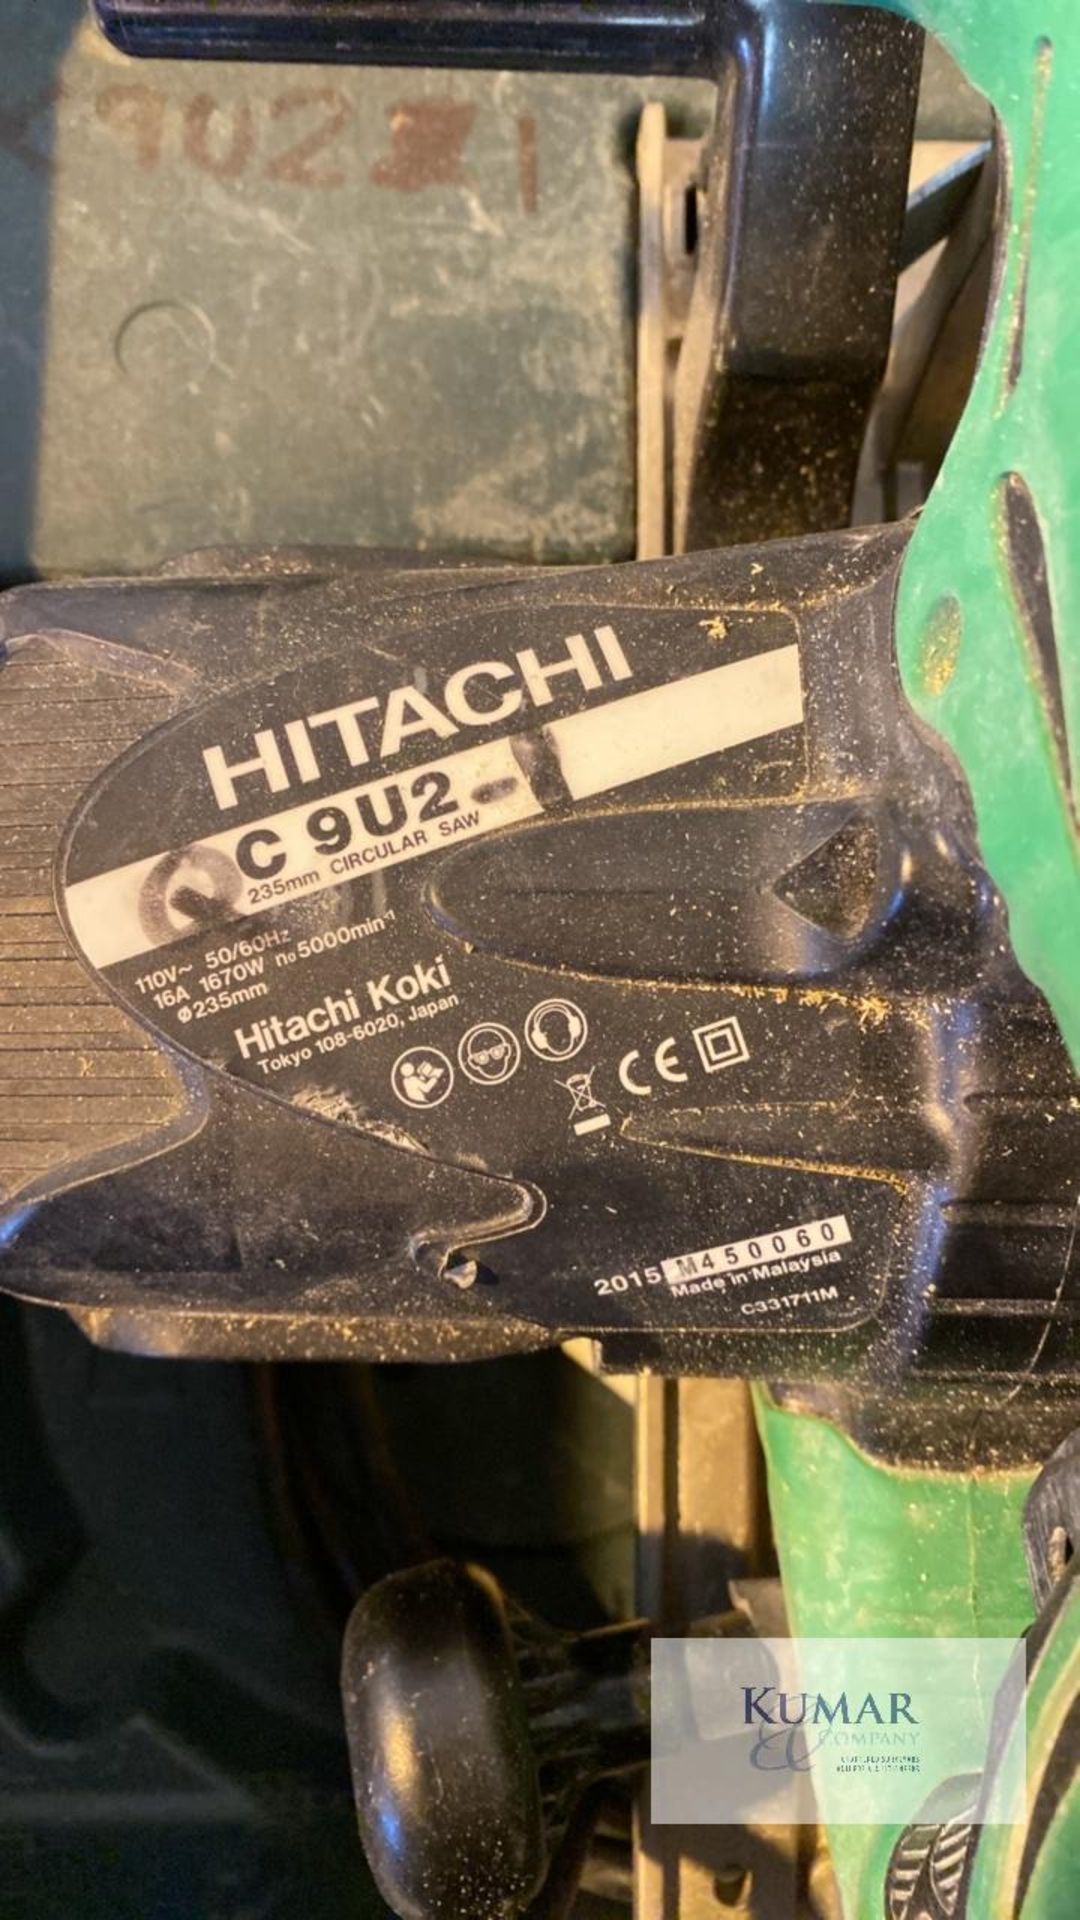 Hitachi C9U2 110v Circular Saw, Serial No.M450060 (2015) in Carry Case - Image 2 of 4